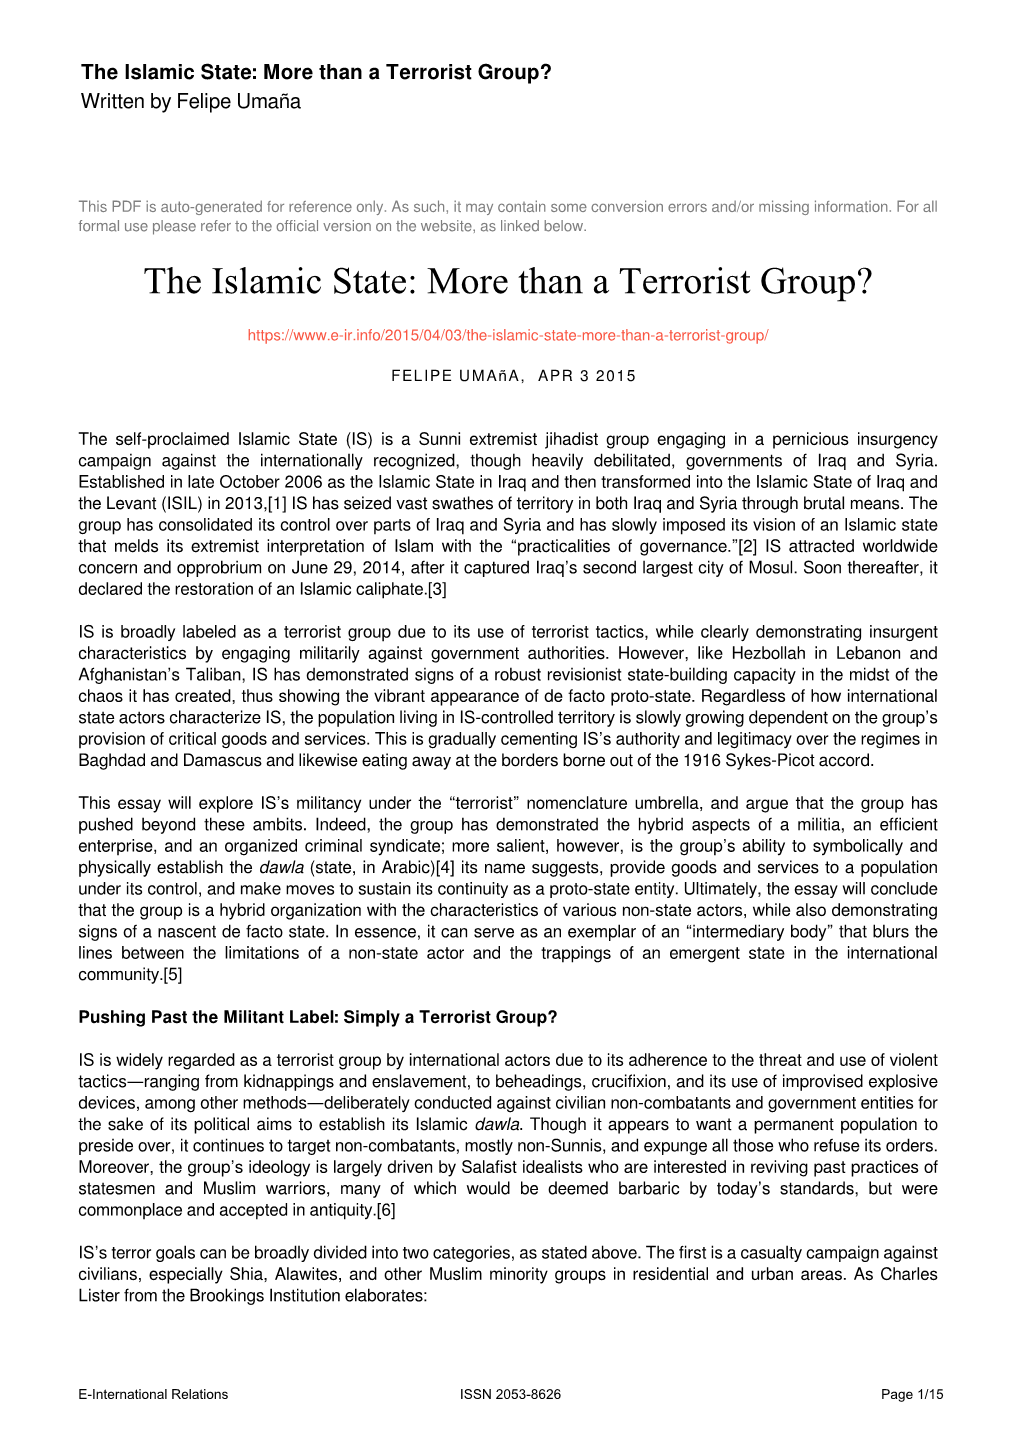 The Islamic State: More Than a Terrorist Group? Written by Felipe Umaña